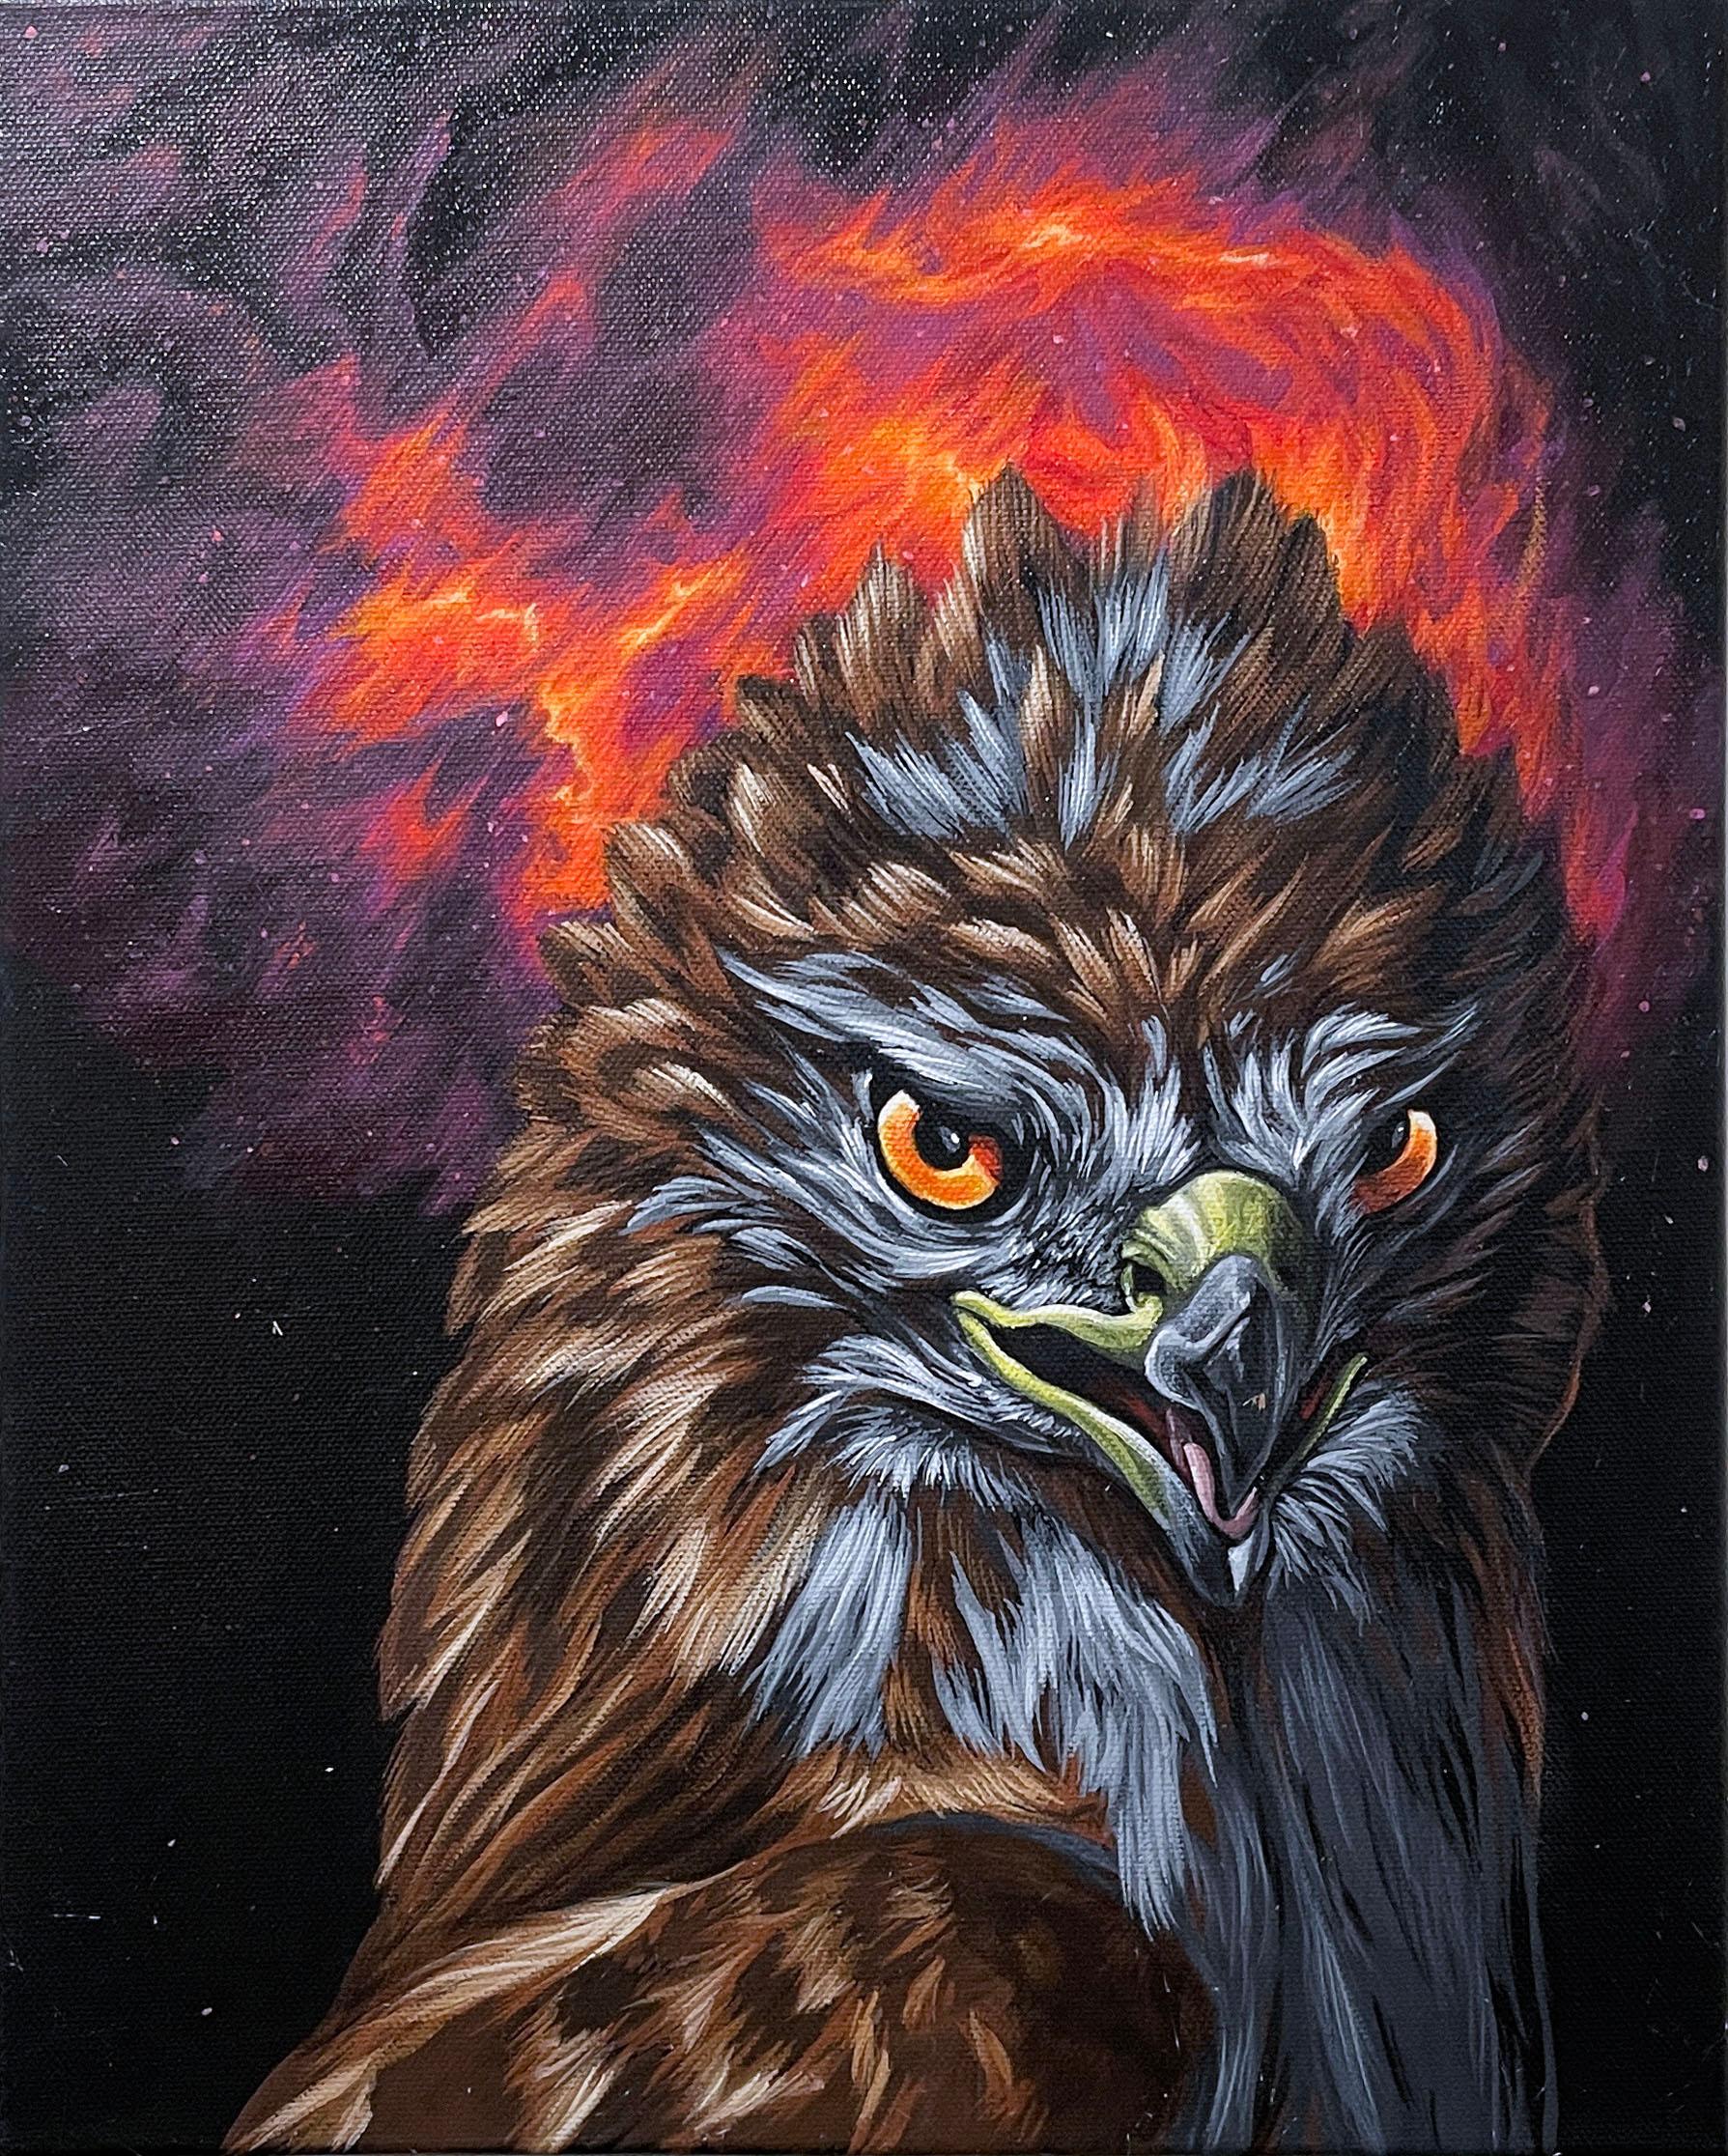 Justin Suarez aka Aerosol Kingdom Animal Painting - Ignition (2019) by Justin Suarez /Aerosol Kingdom, animal, bird, black, fire red